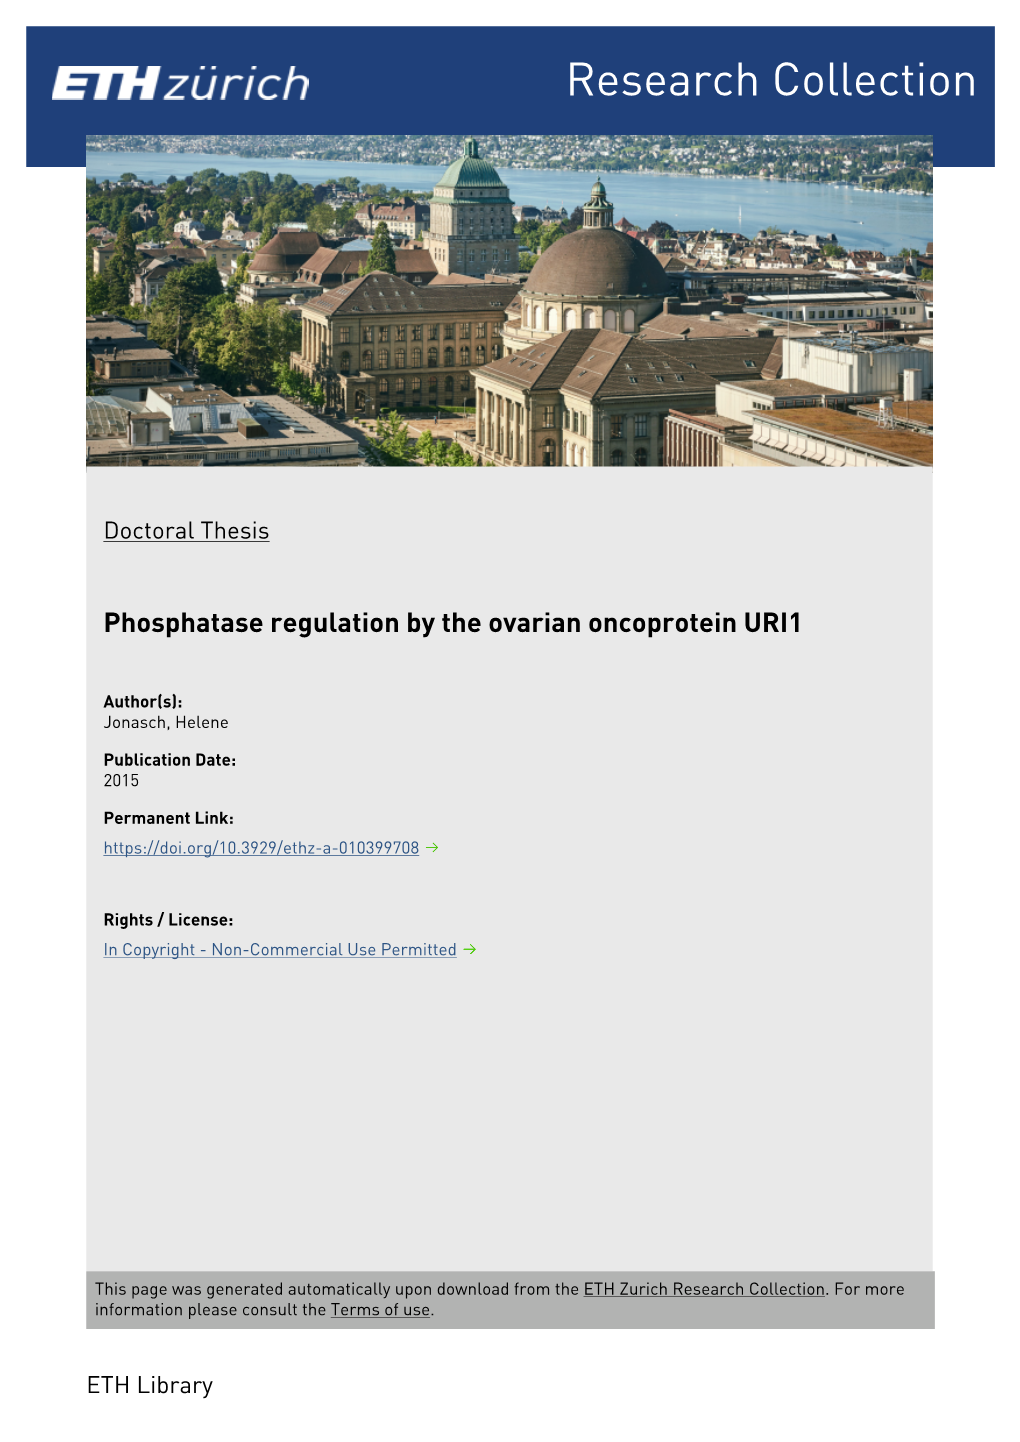 Phosphatase Regulation by the Ovarian Oncoprotein URI1